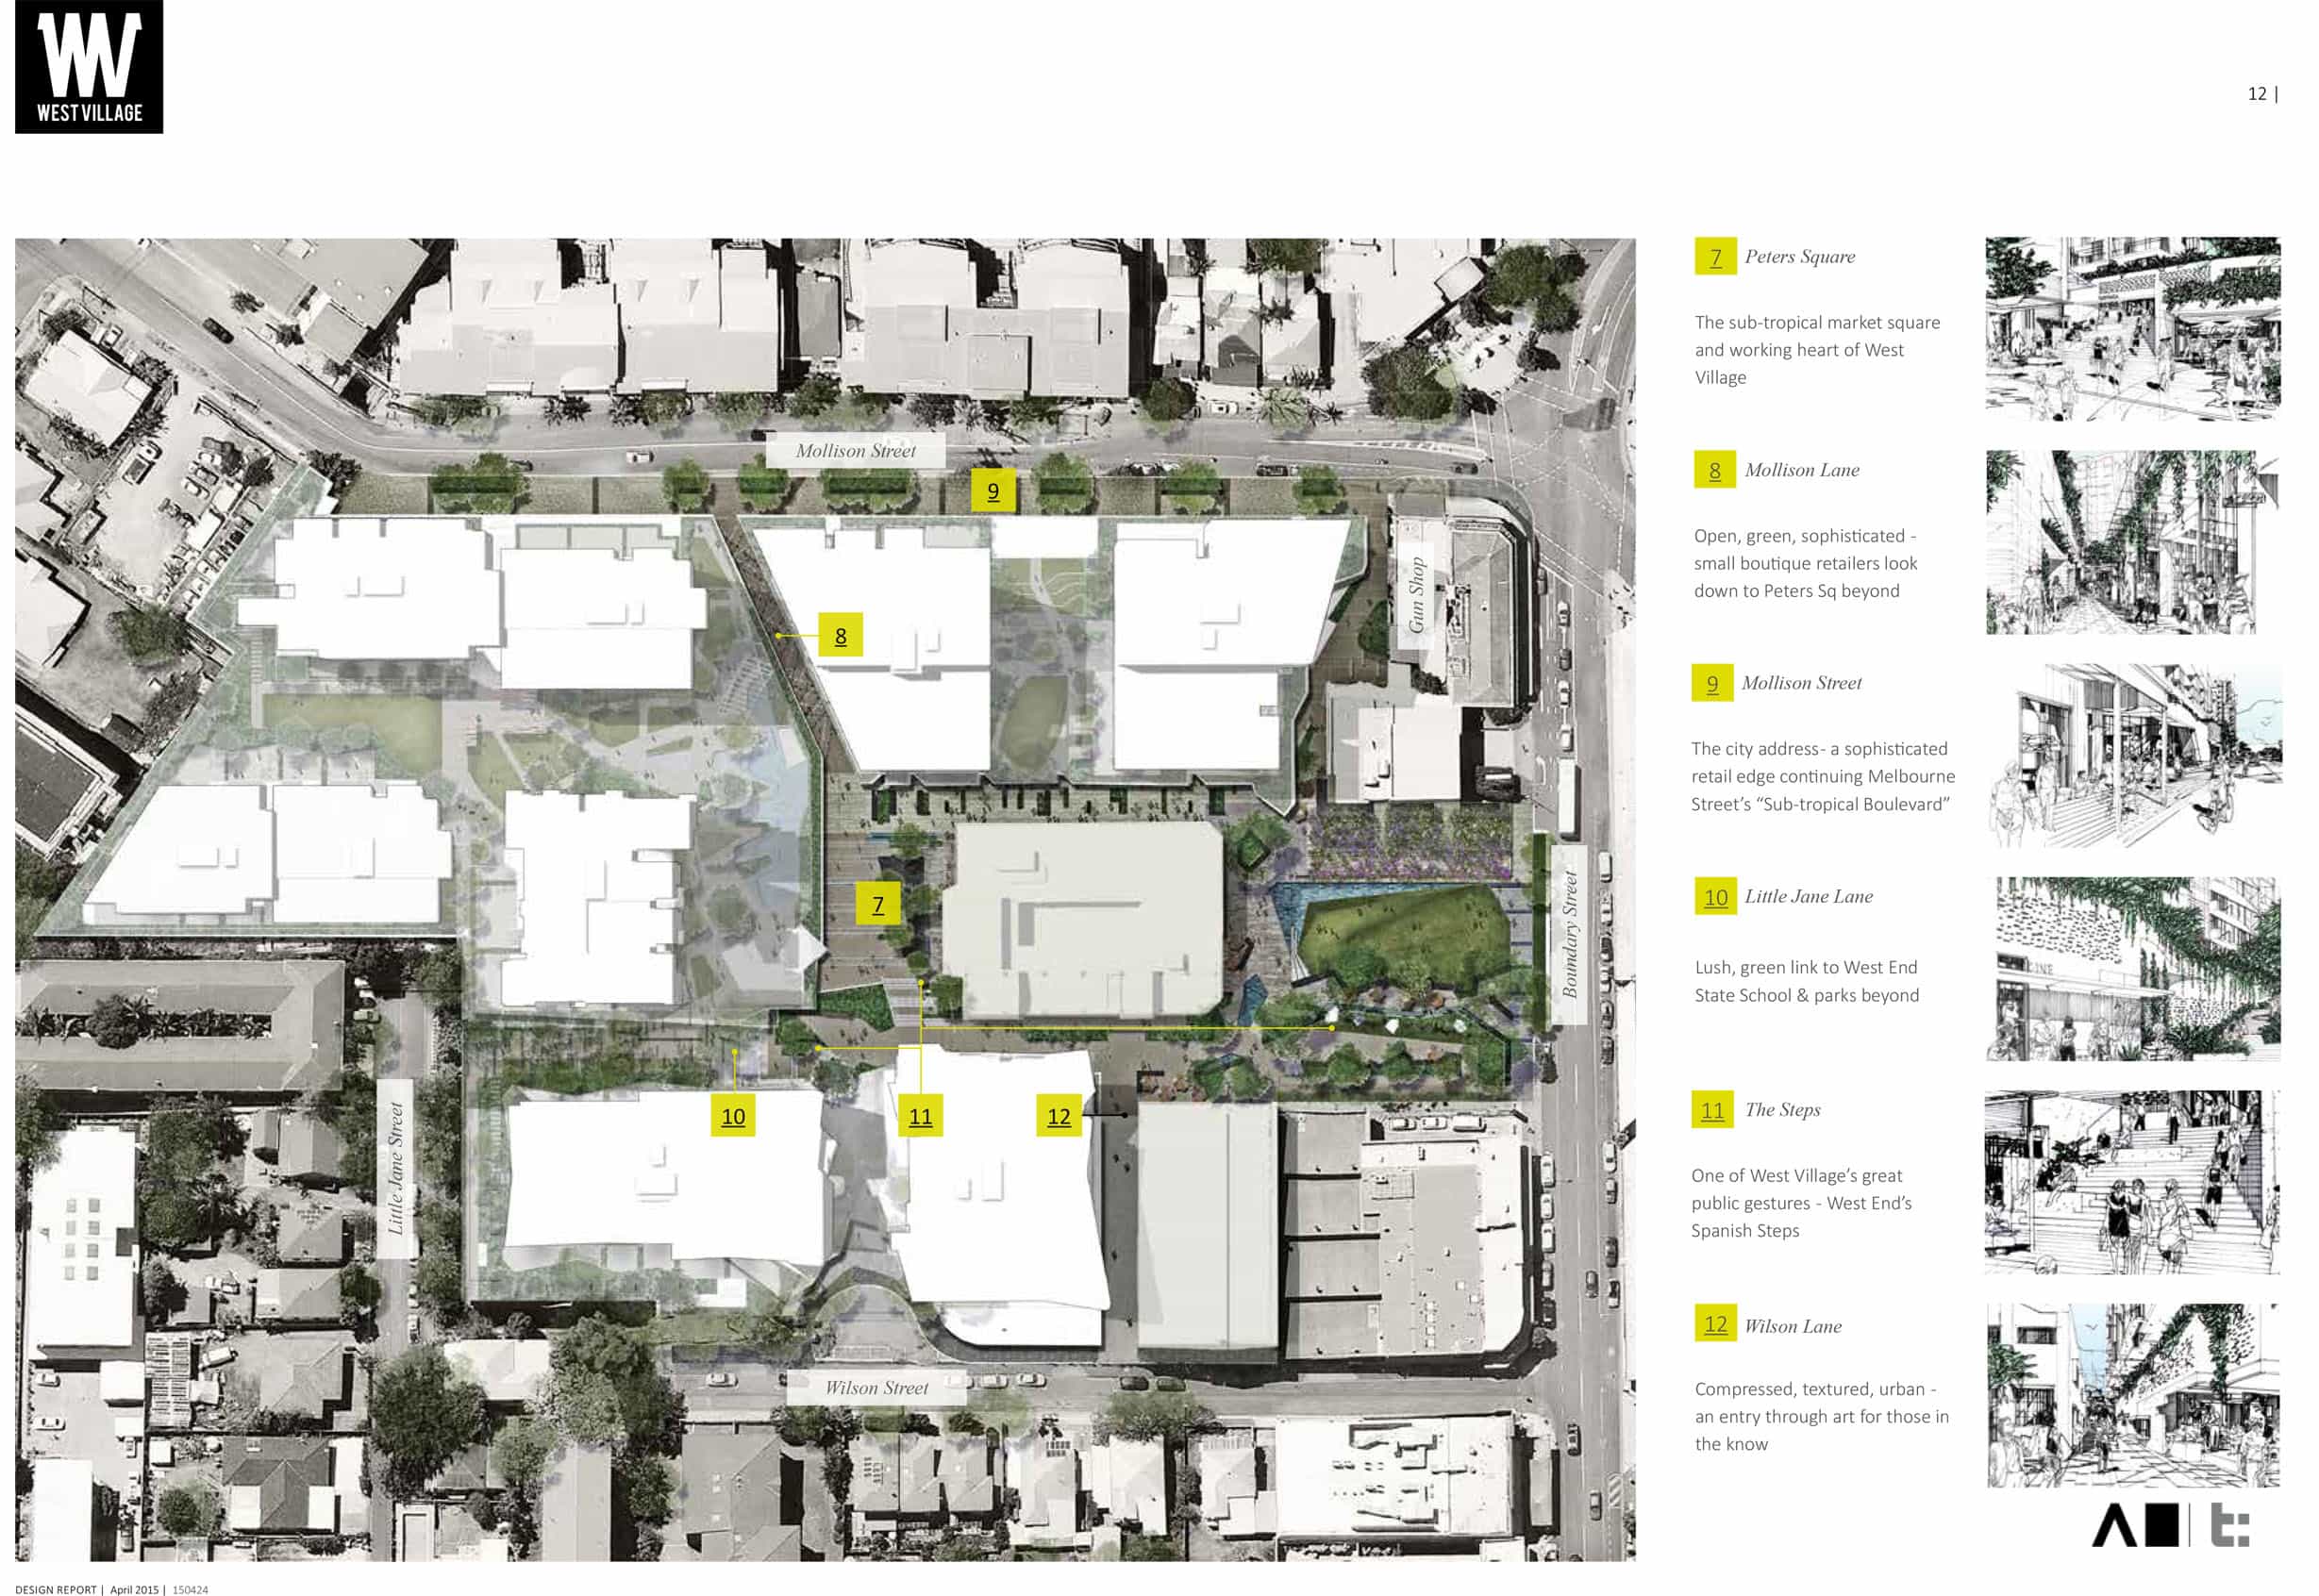 West Village Plan: creating an urban community in West End